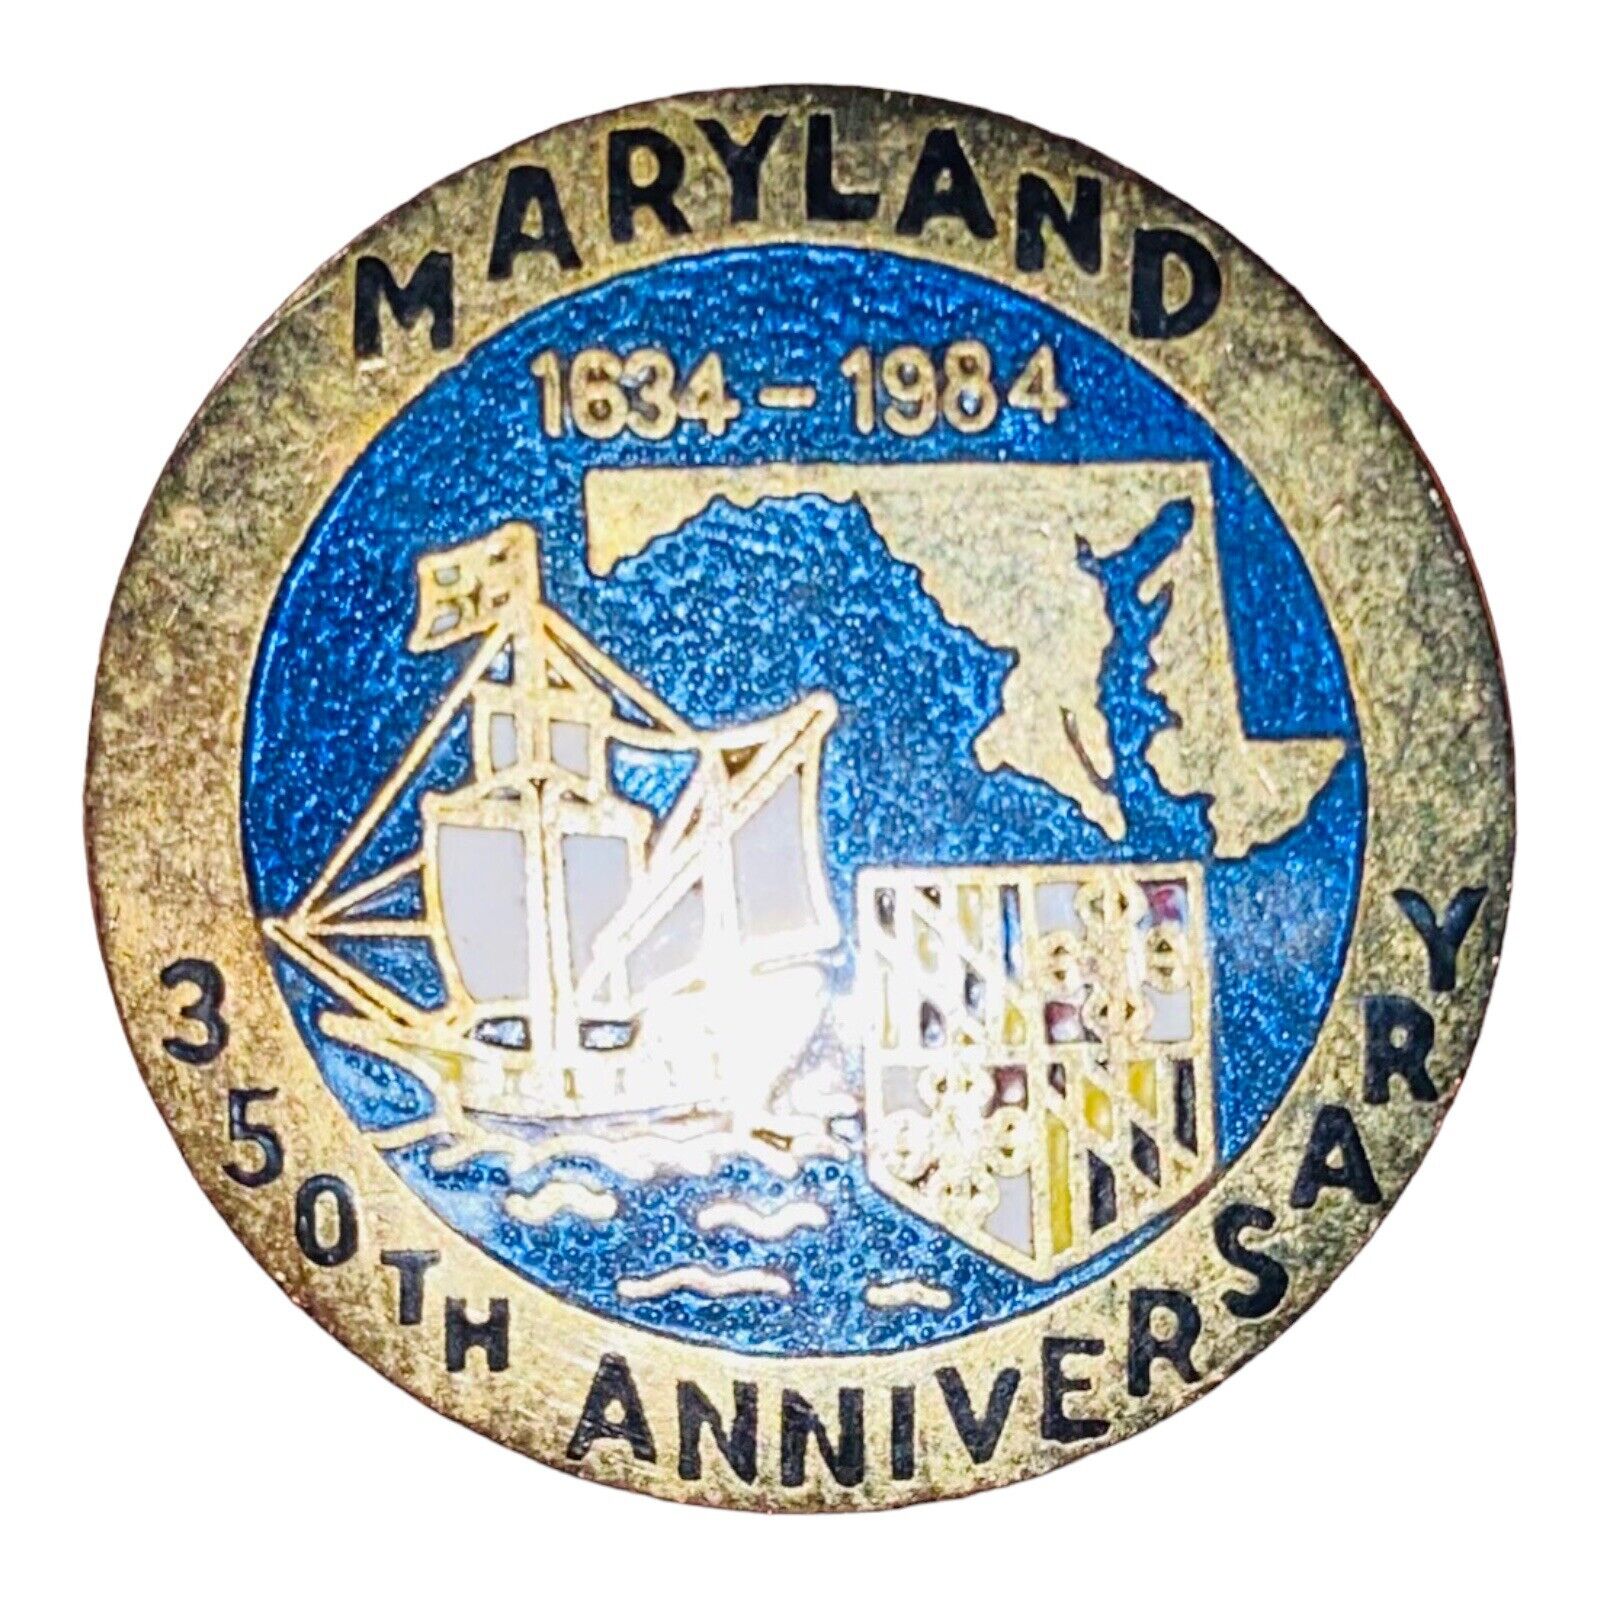 Vintage 1984 Maryland 350th Anniversary Lapel Hat Pin 1634-1984  562